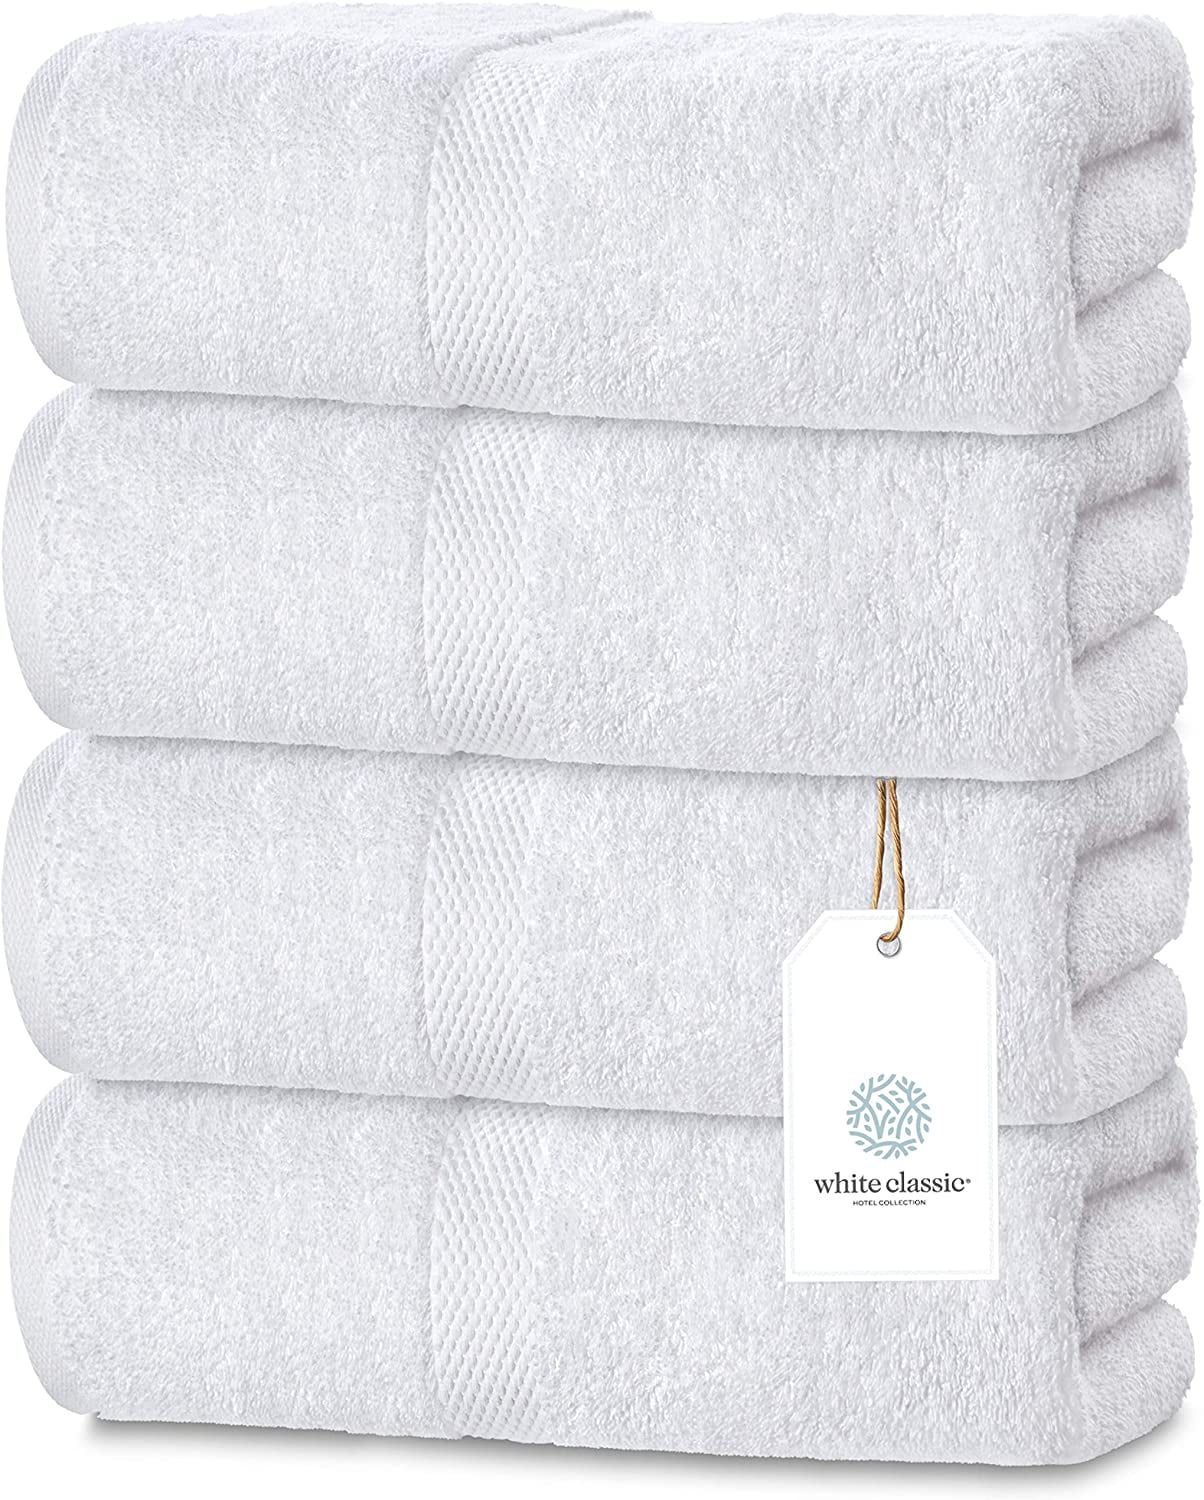 24 new cotton blend 24x50 white hotel platinum bath towels hotel spa resort irg 